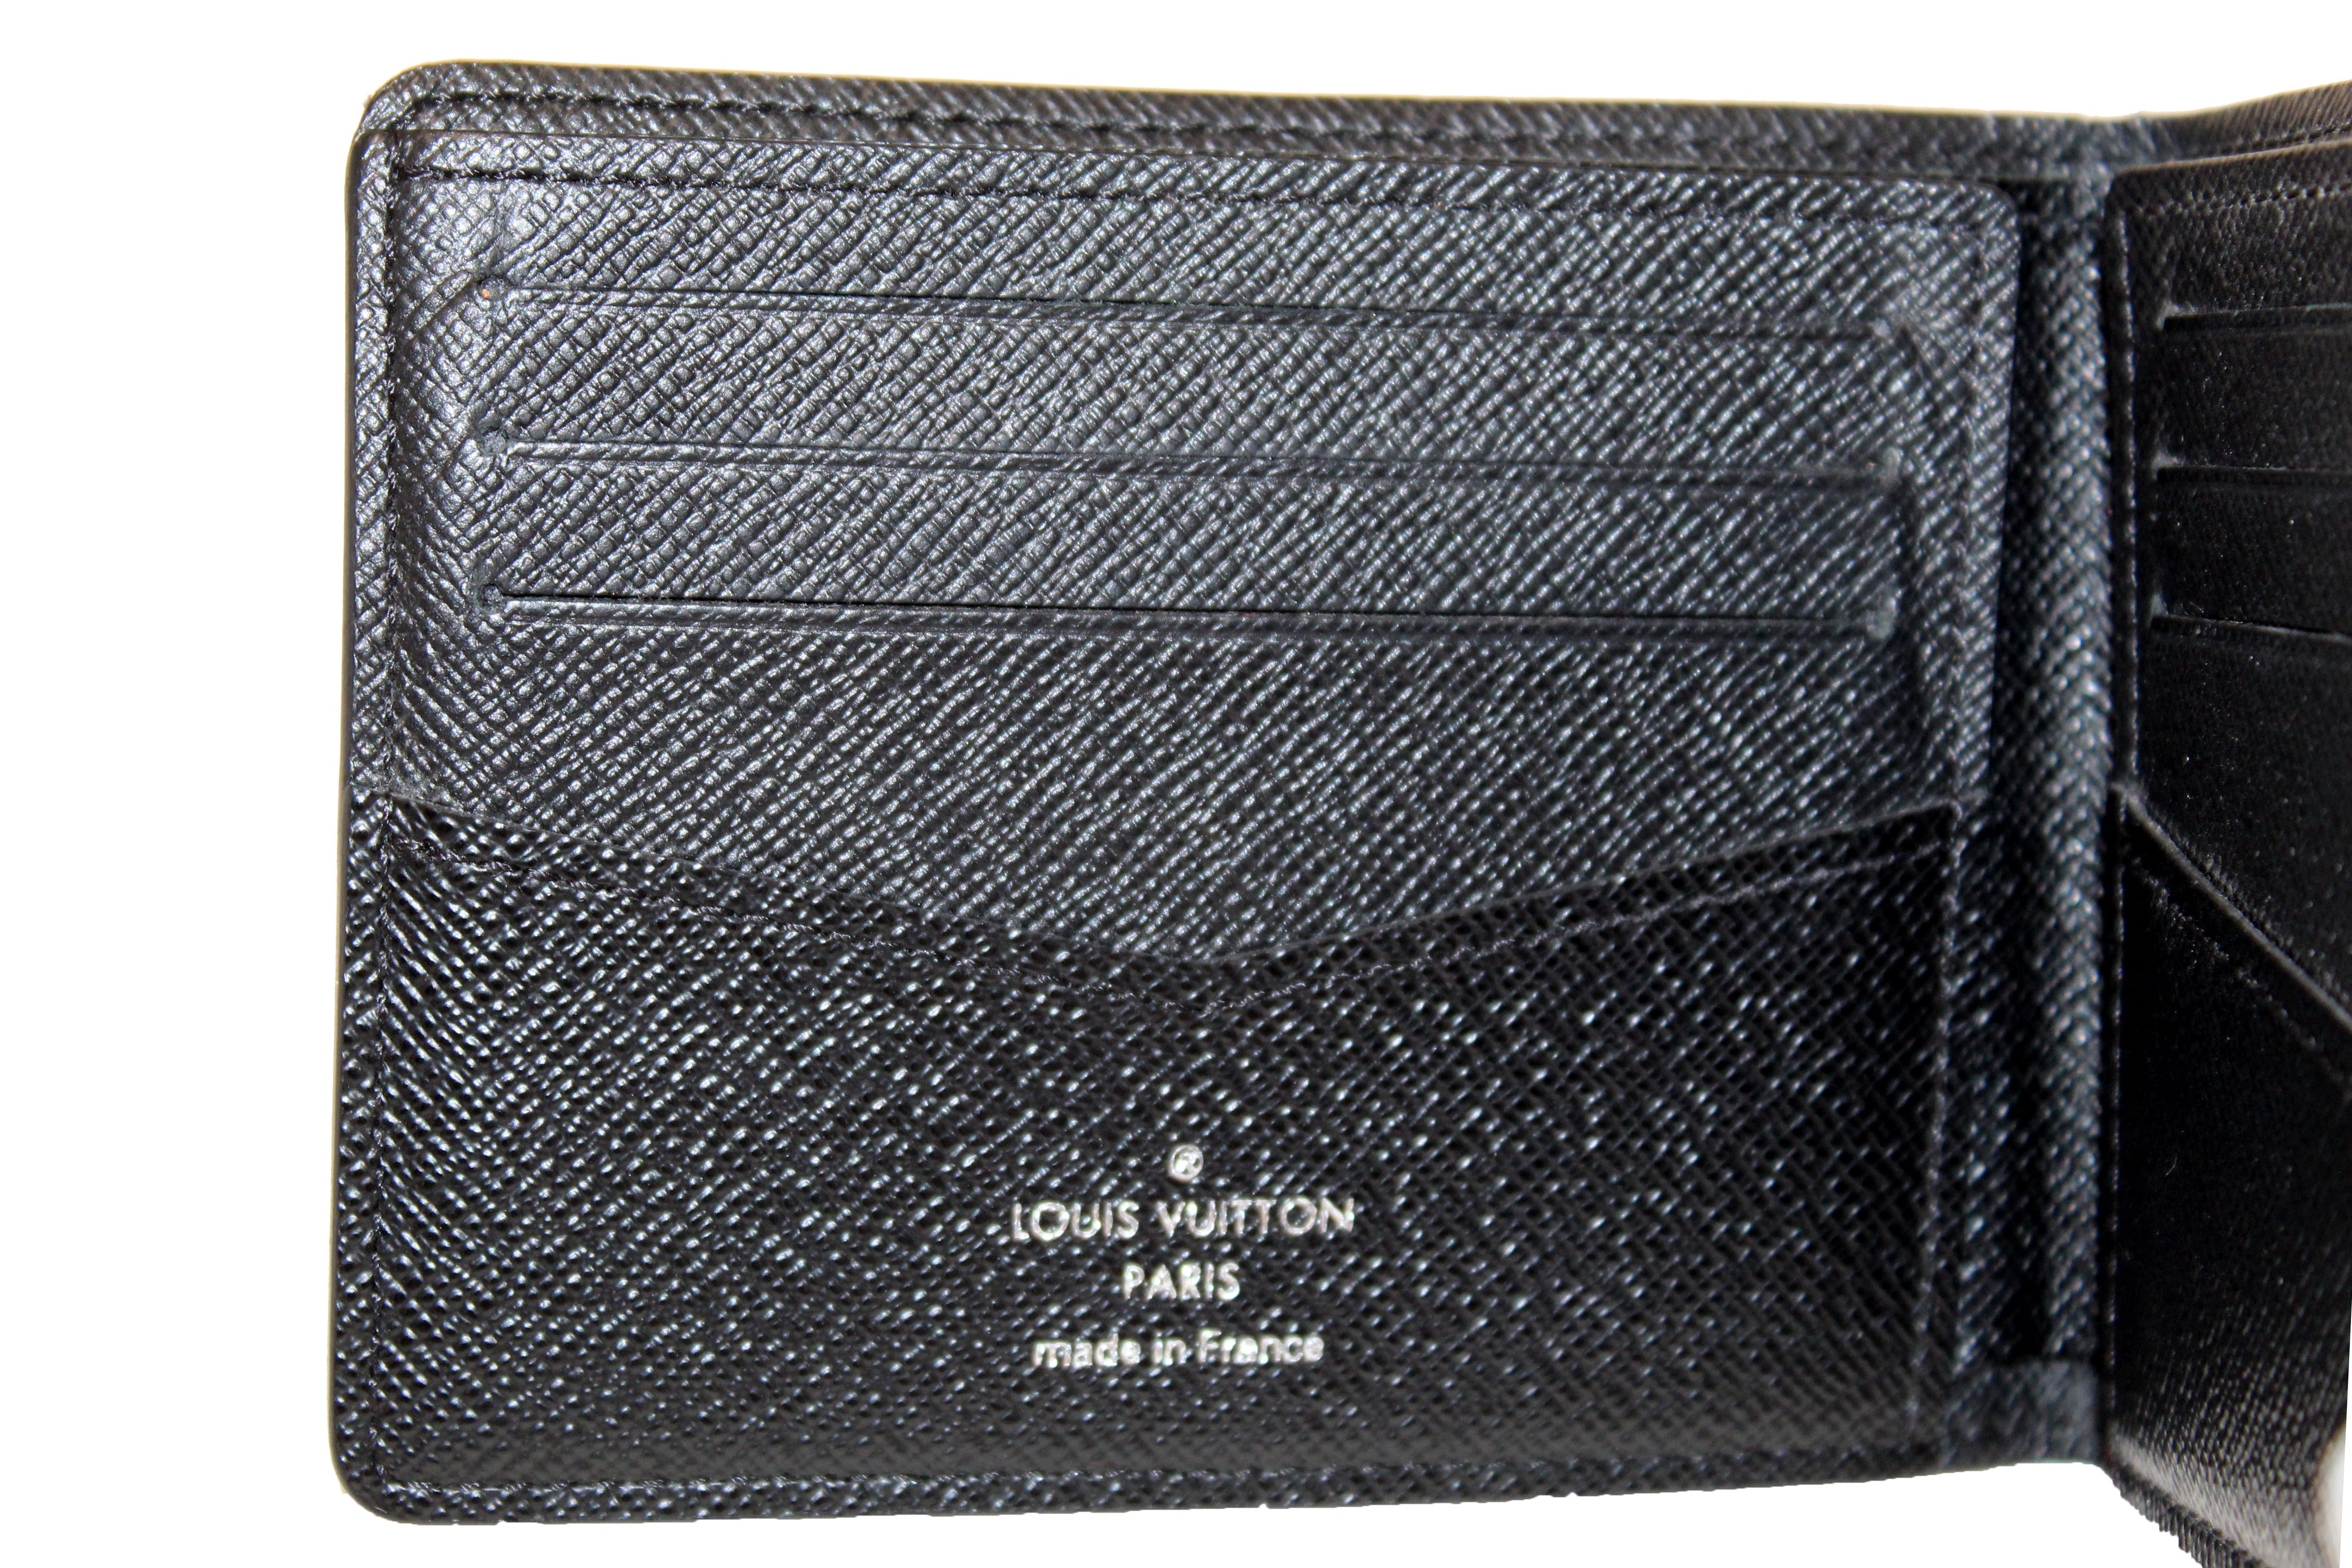 Louis Vuitton Wallet Slender Damier Ebene Brown in Canvas - US